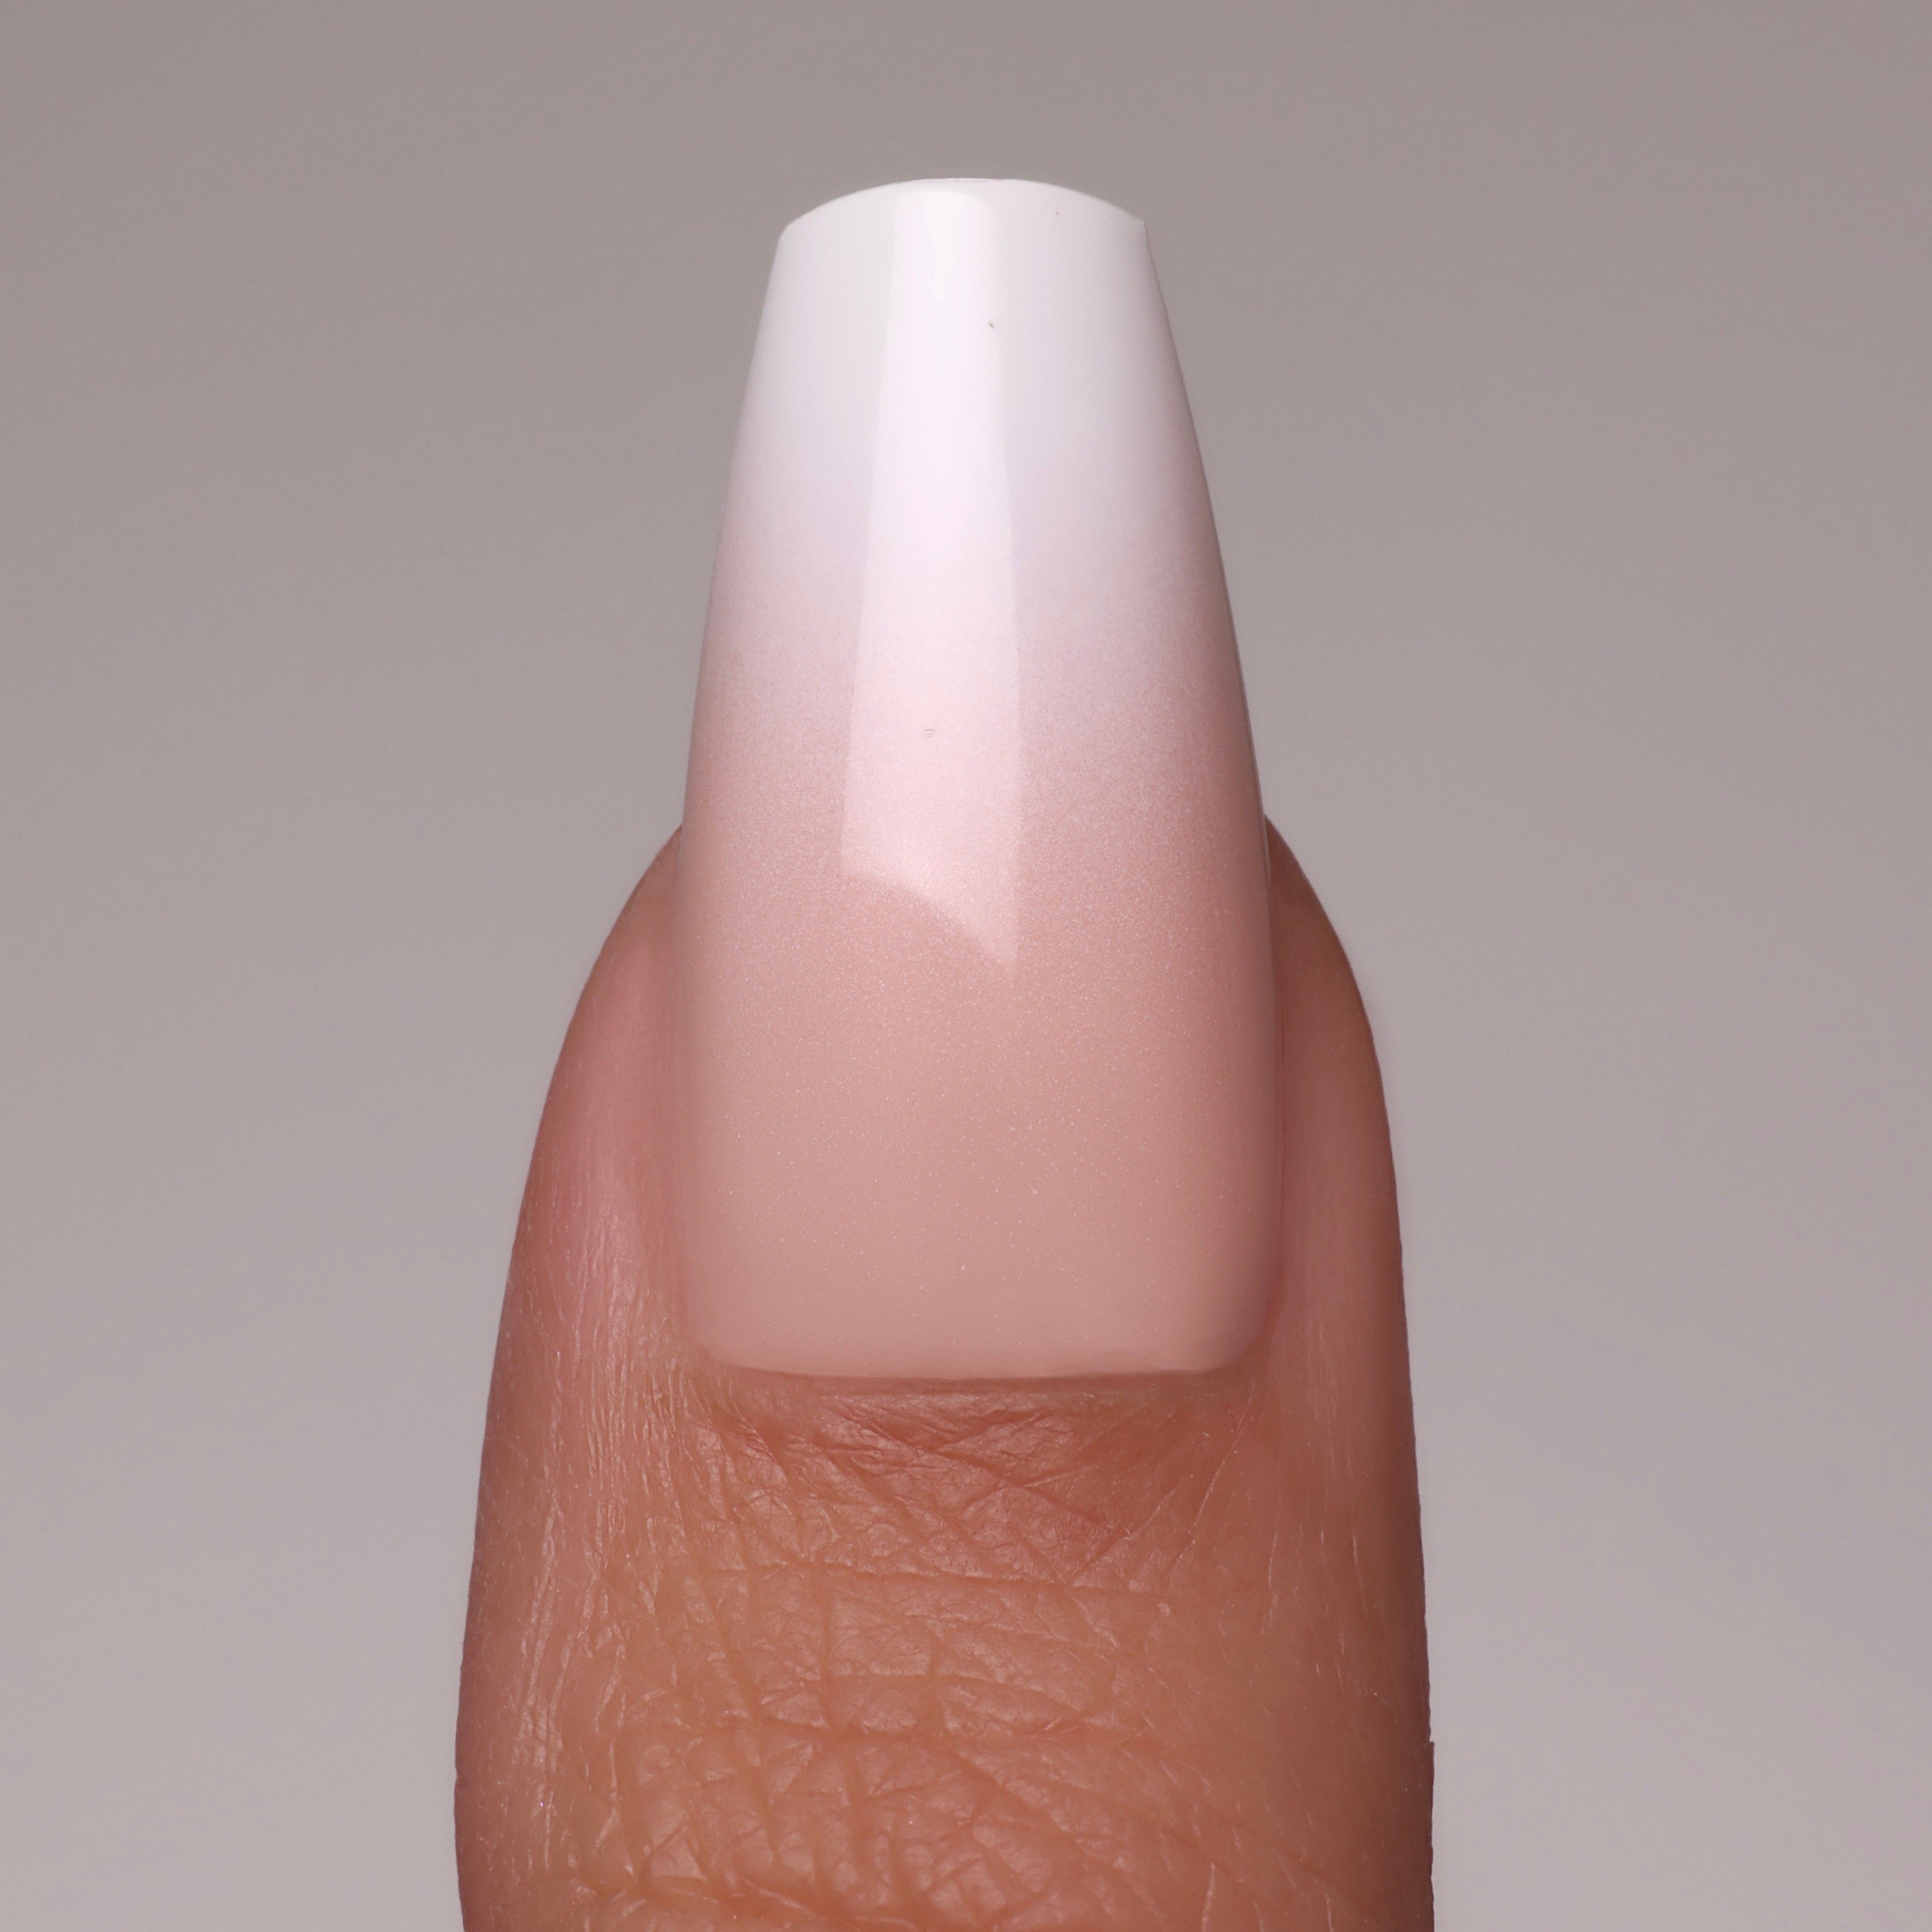 NAKED OMBRÉ Acrylish (extra long) Press on Nails